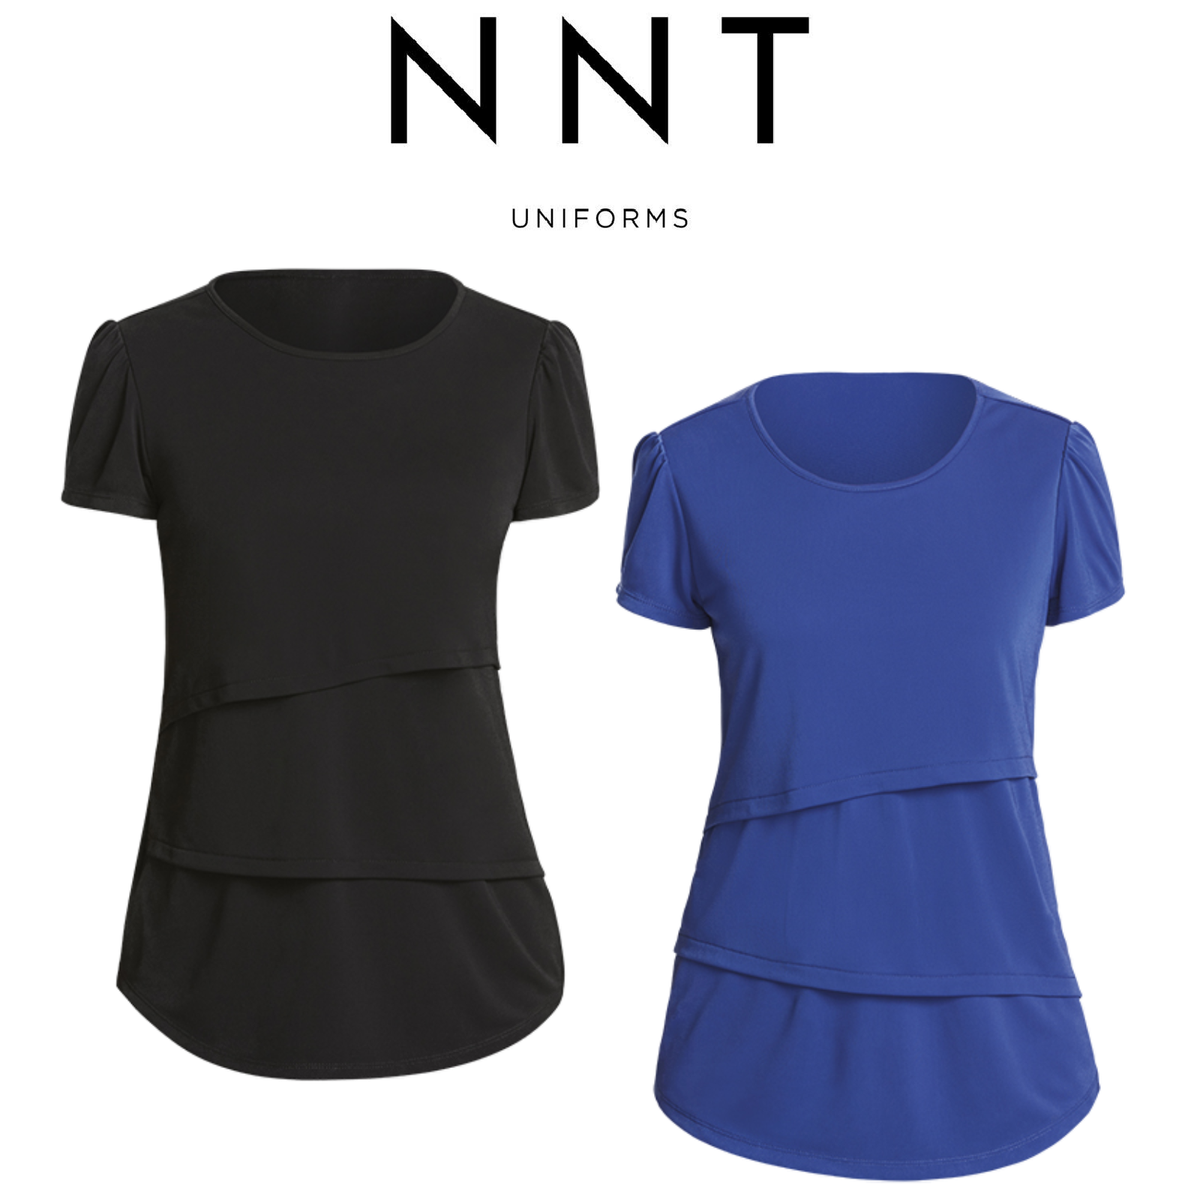 NNT Womens Short Sleeve Layered Top Curved Hemline Formal Comfy Business CATU7C